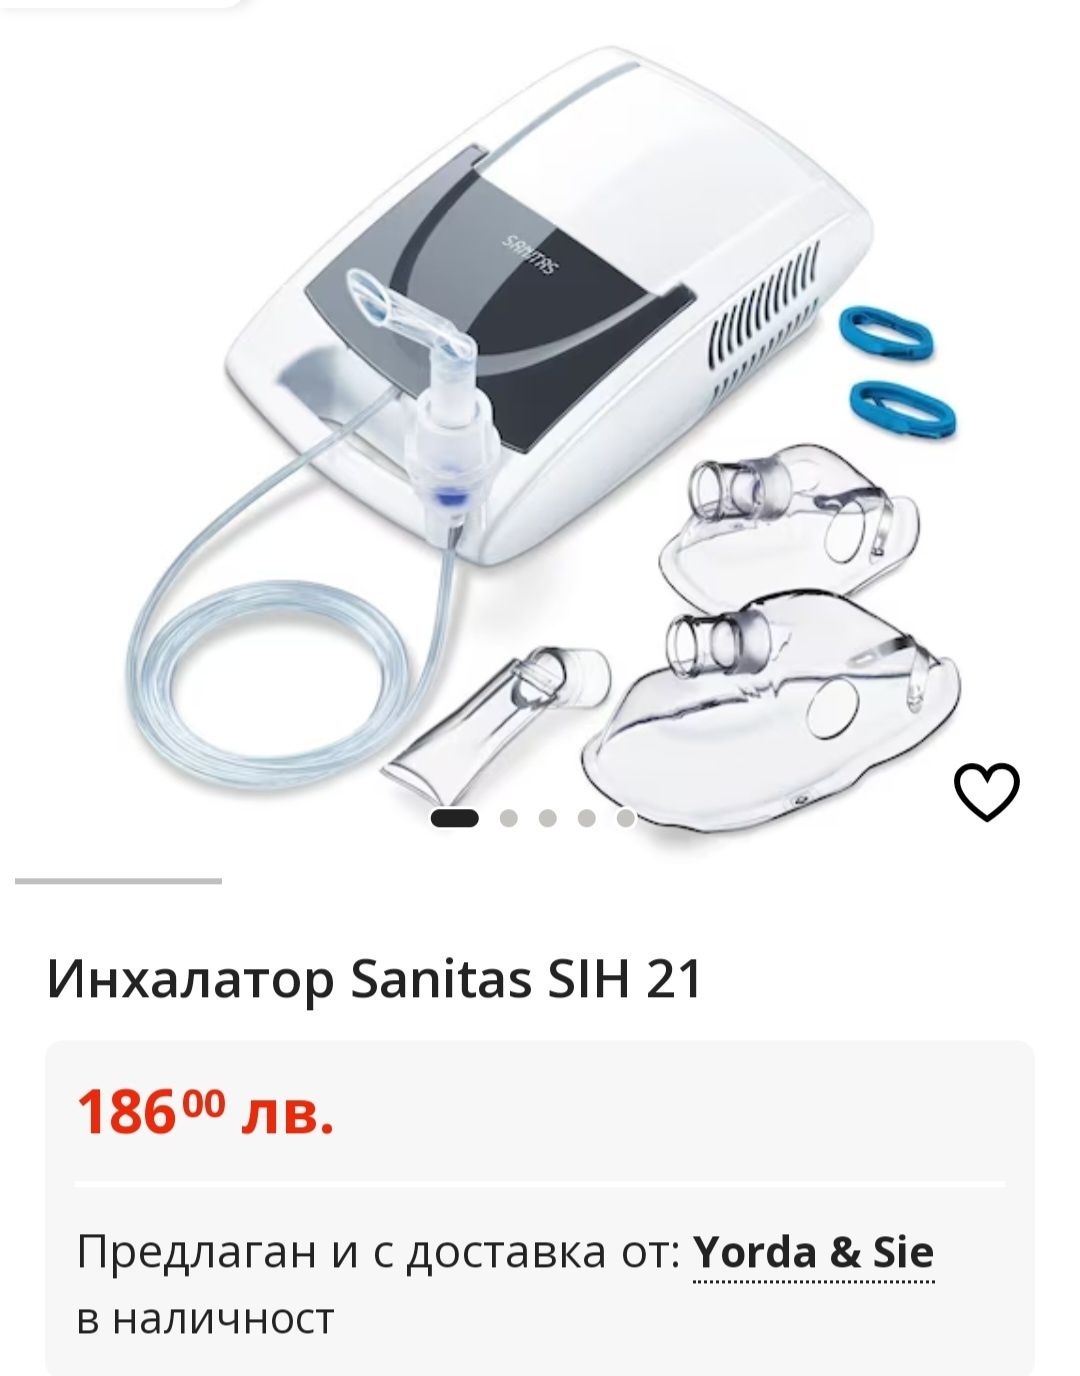 Инхалатор Sanitas SIH 21 , ползван изключително малко- 75лв.